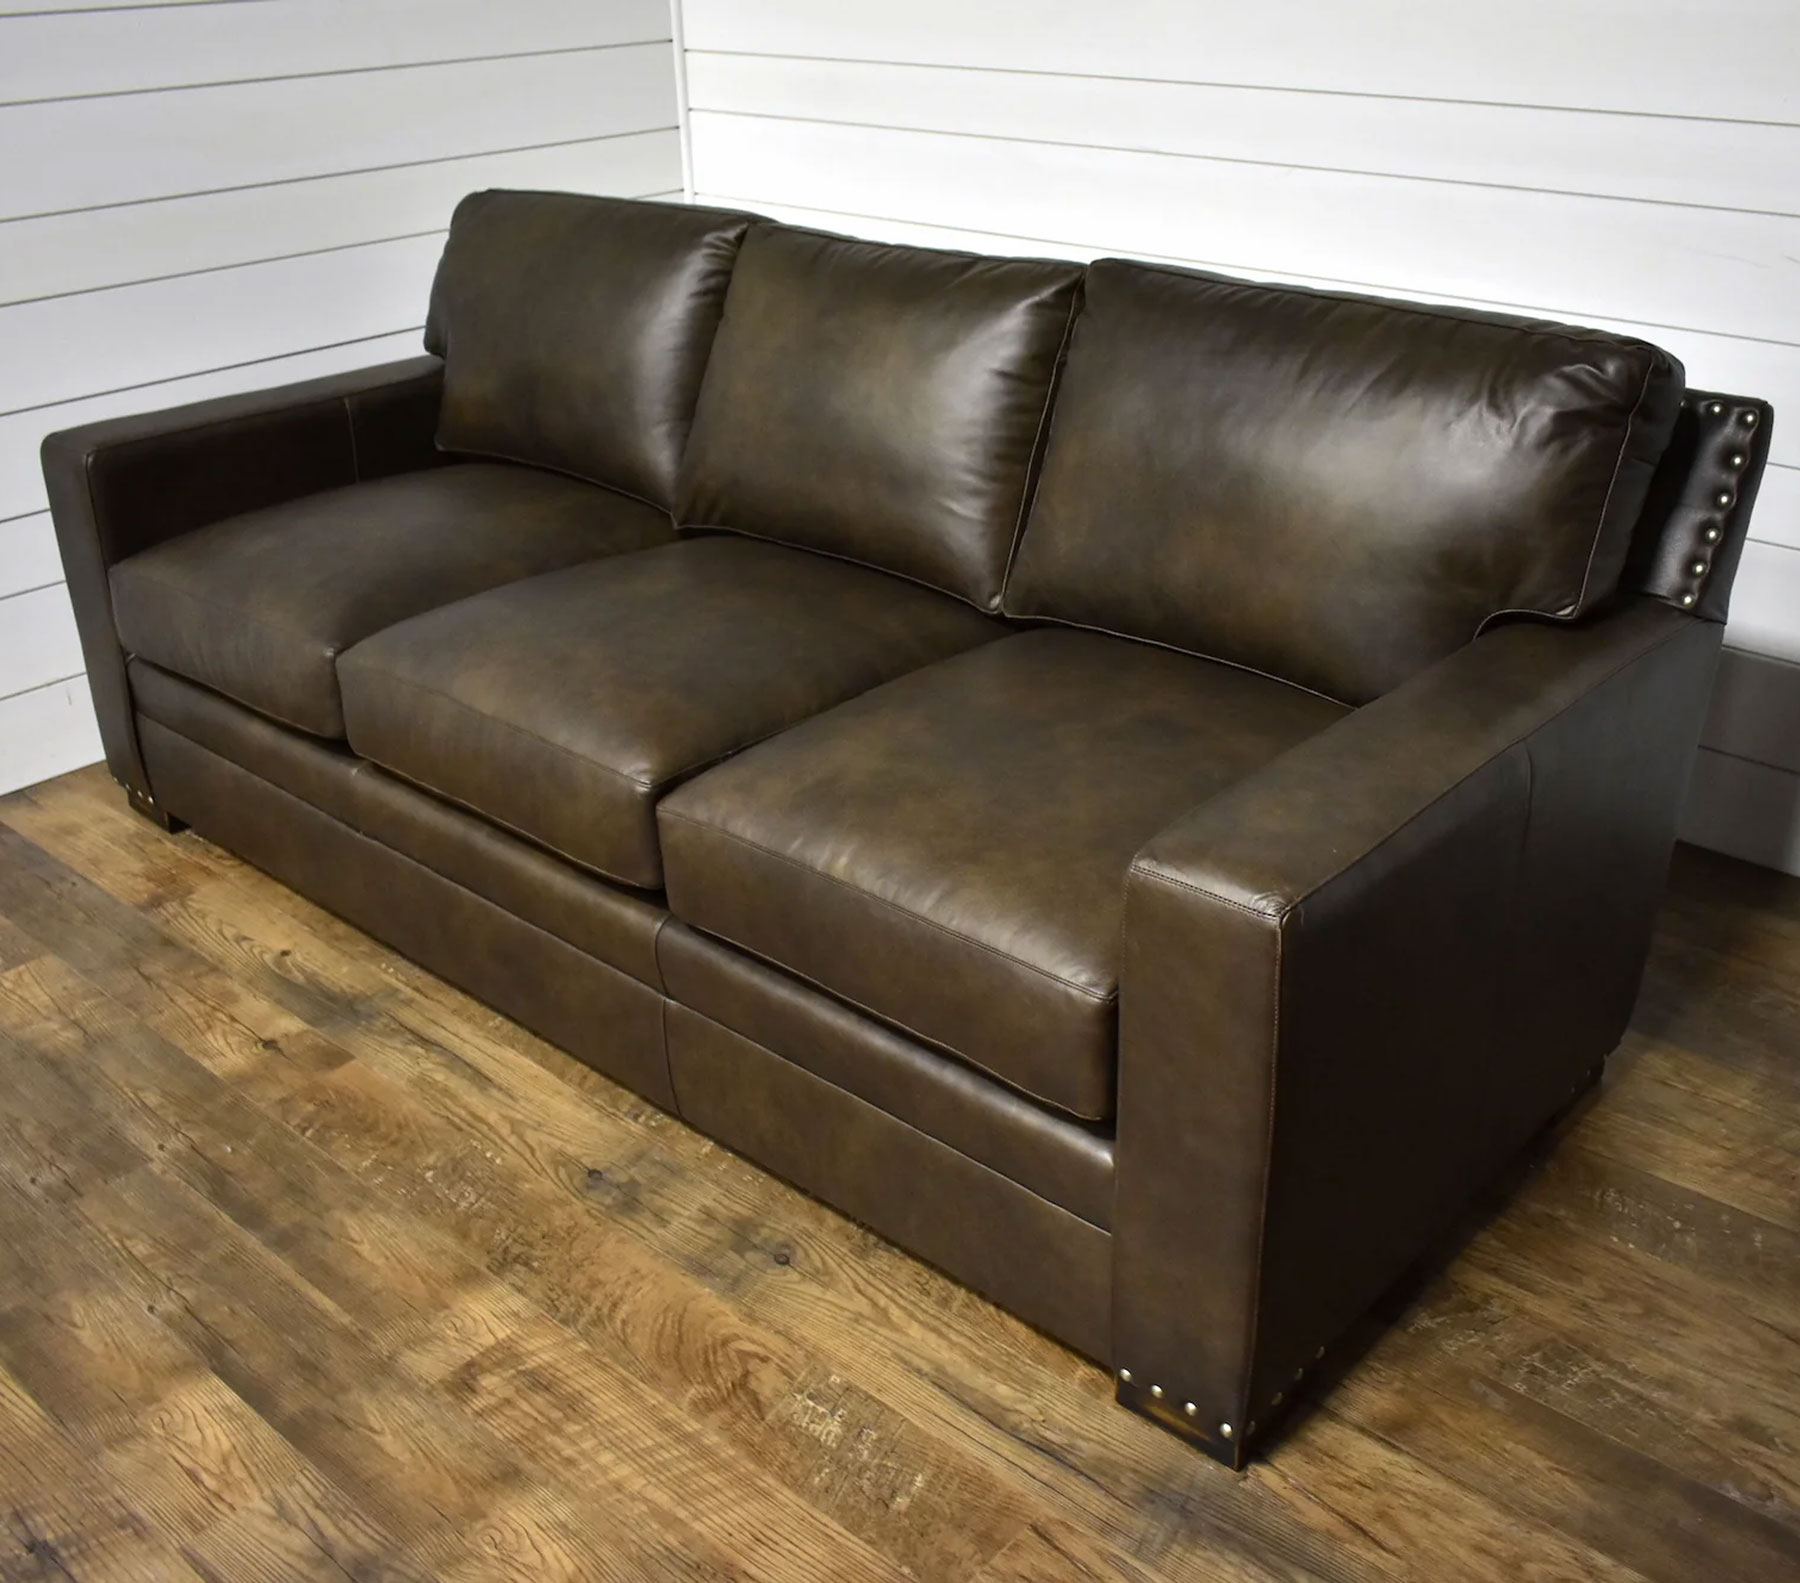 McKinley Leather Franklin 92 inch Sofa in Rio Fudge Leather